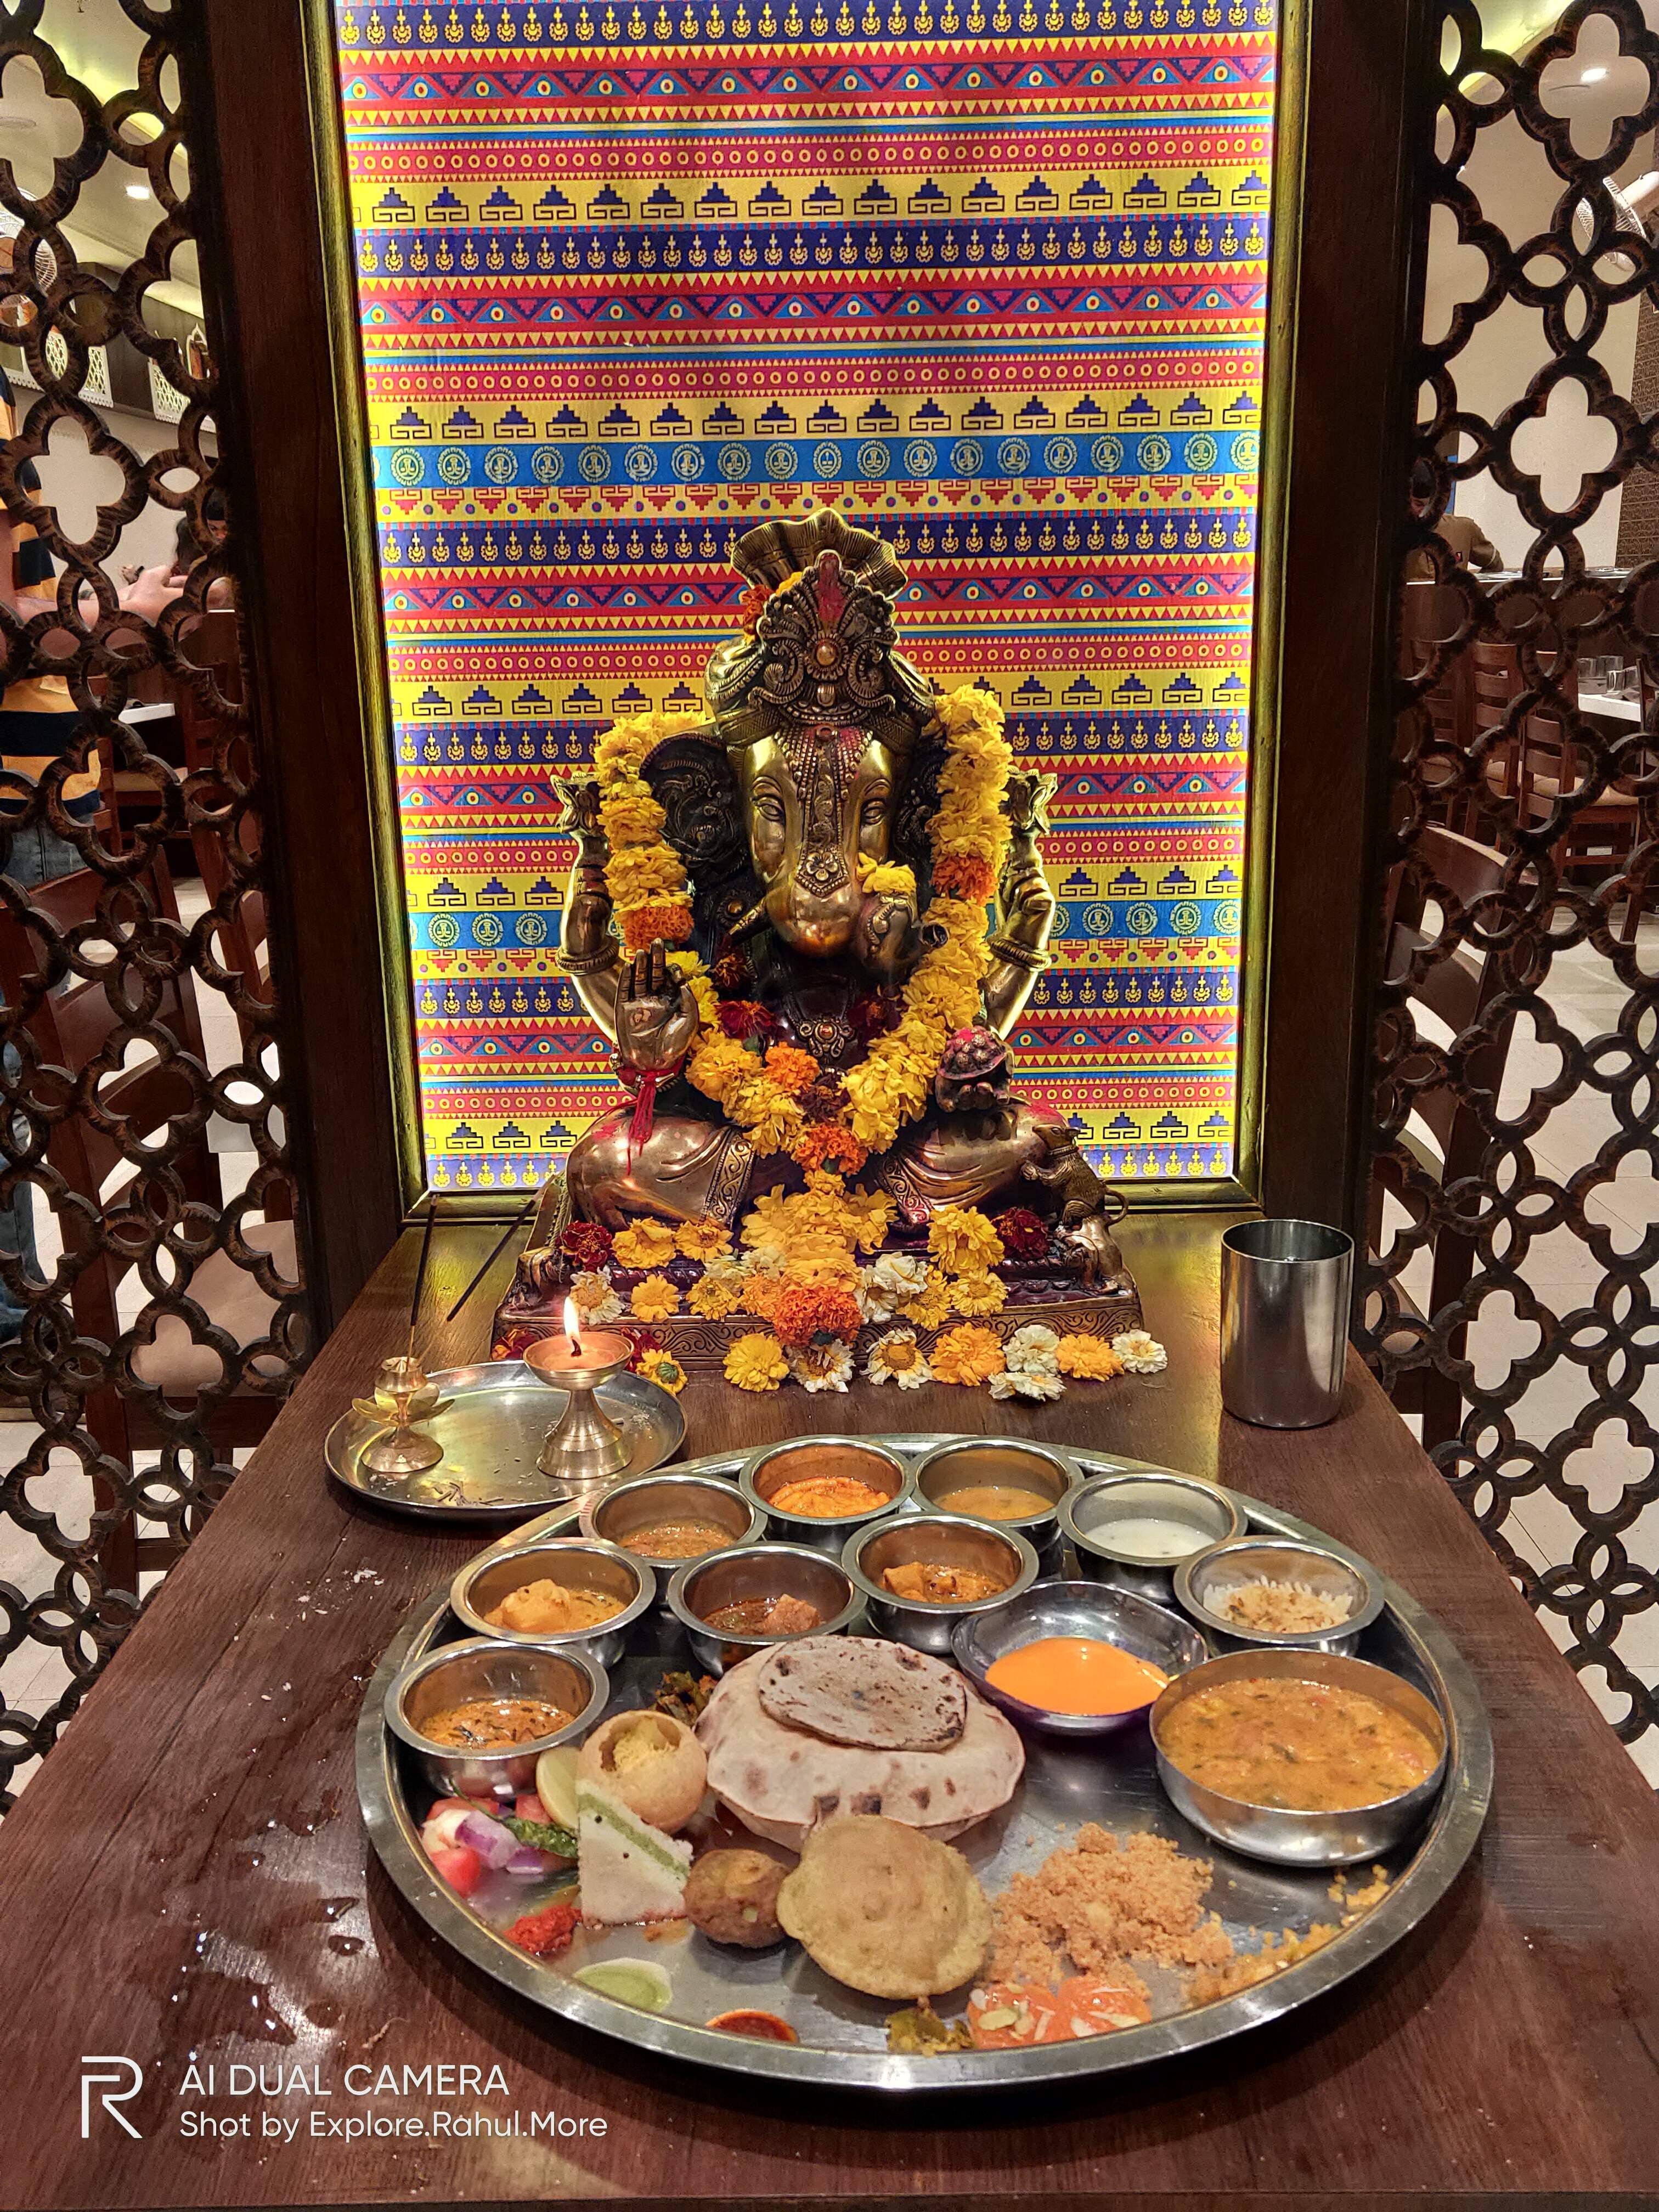 Food,Cuisine,Hindu temple,Place of worship,Dish,Temple